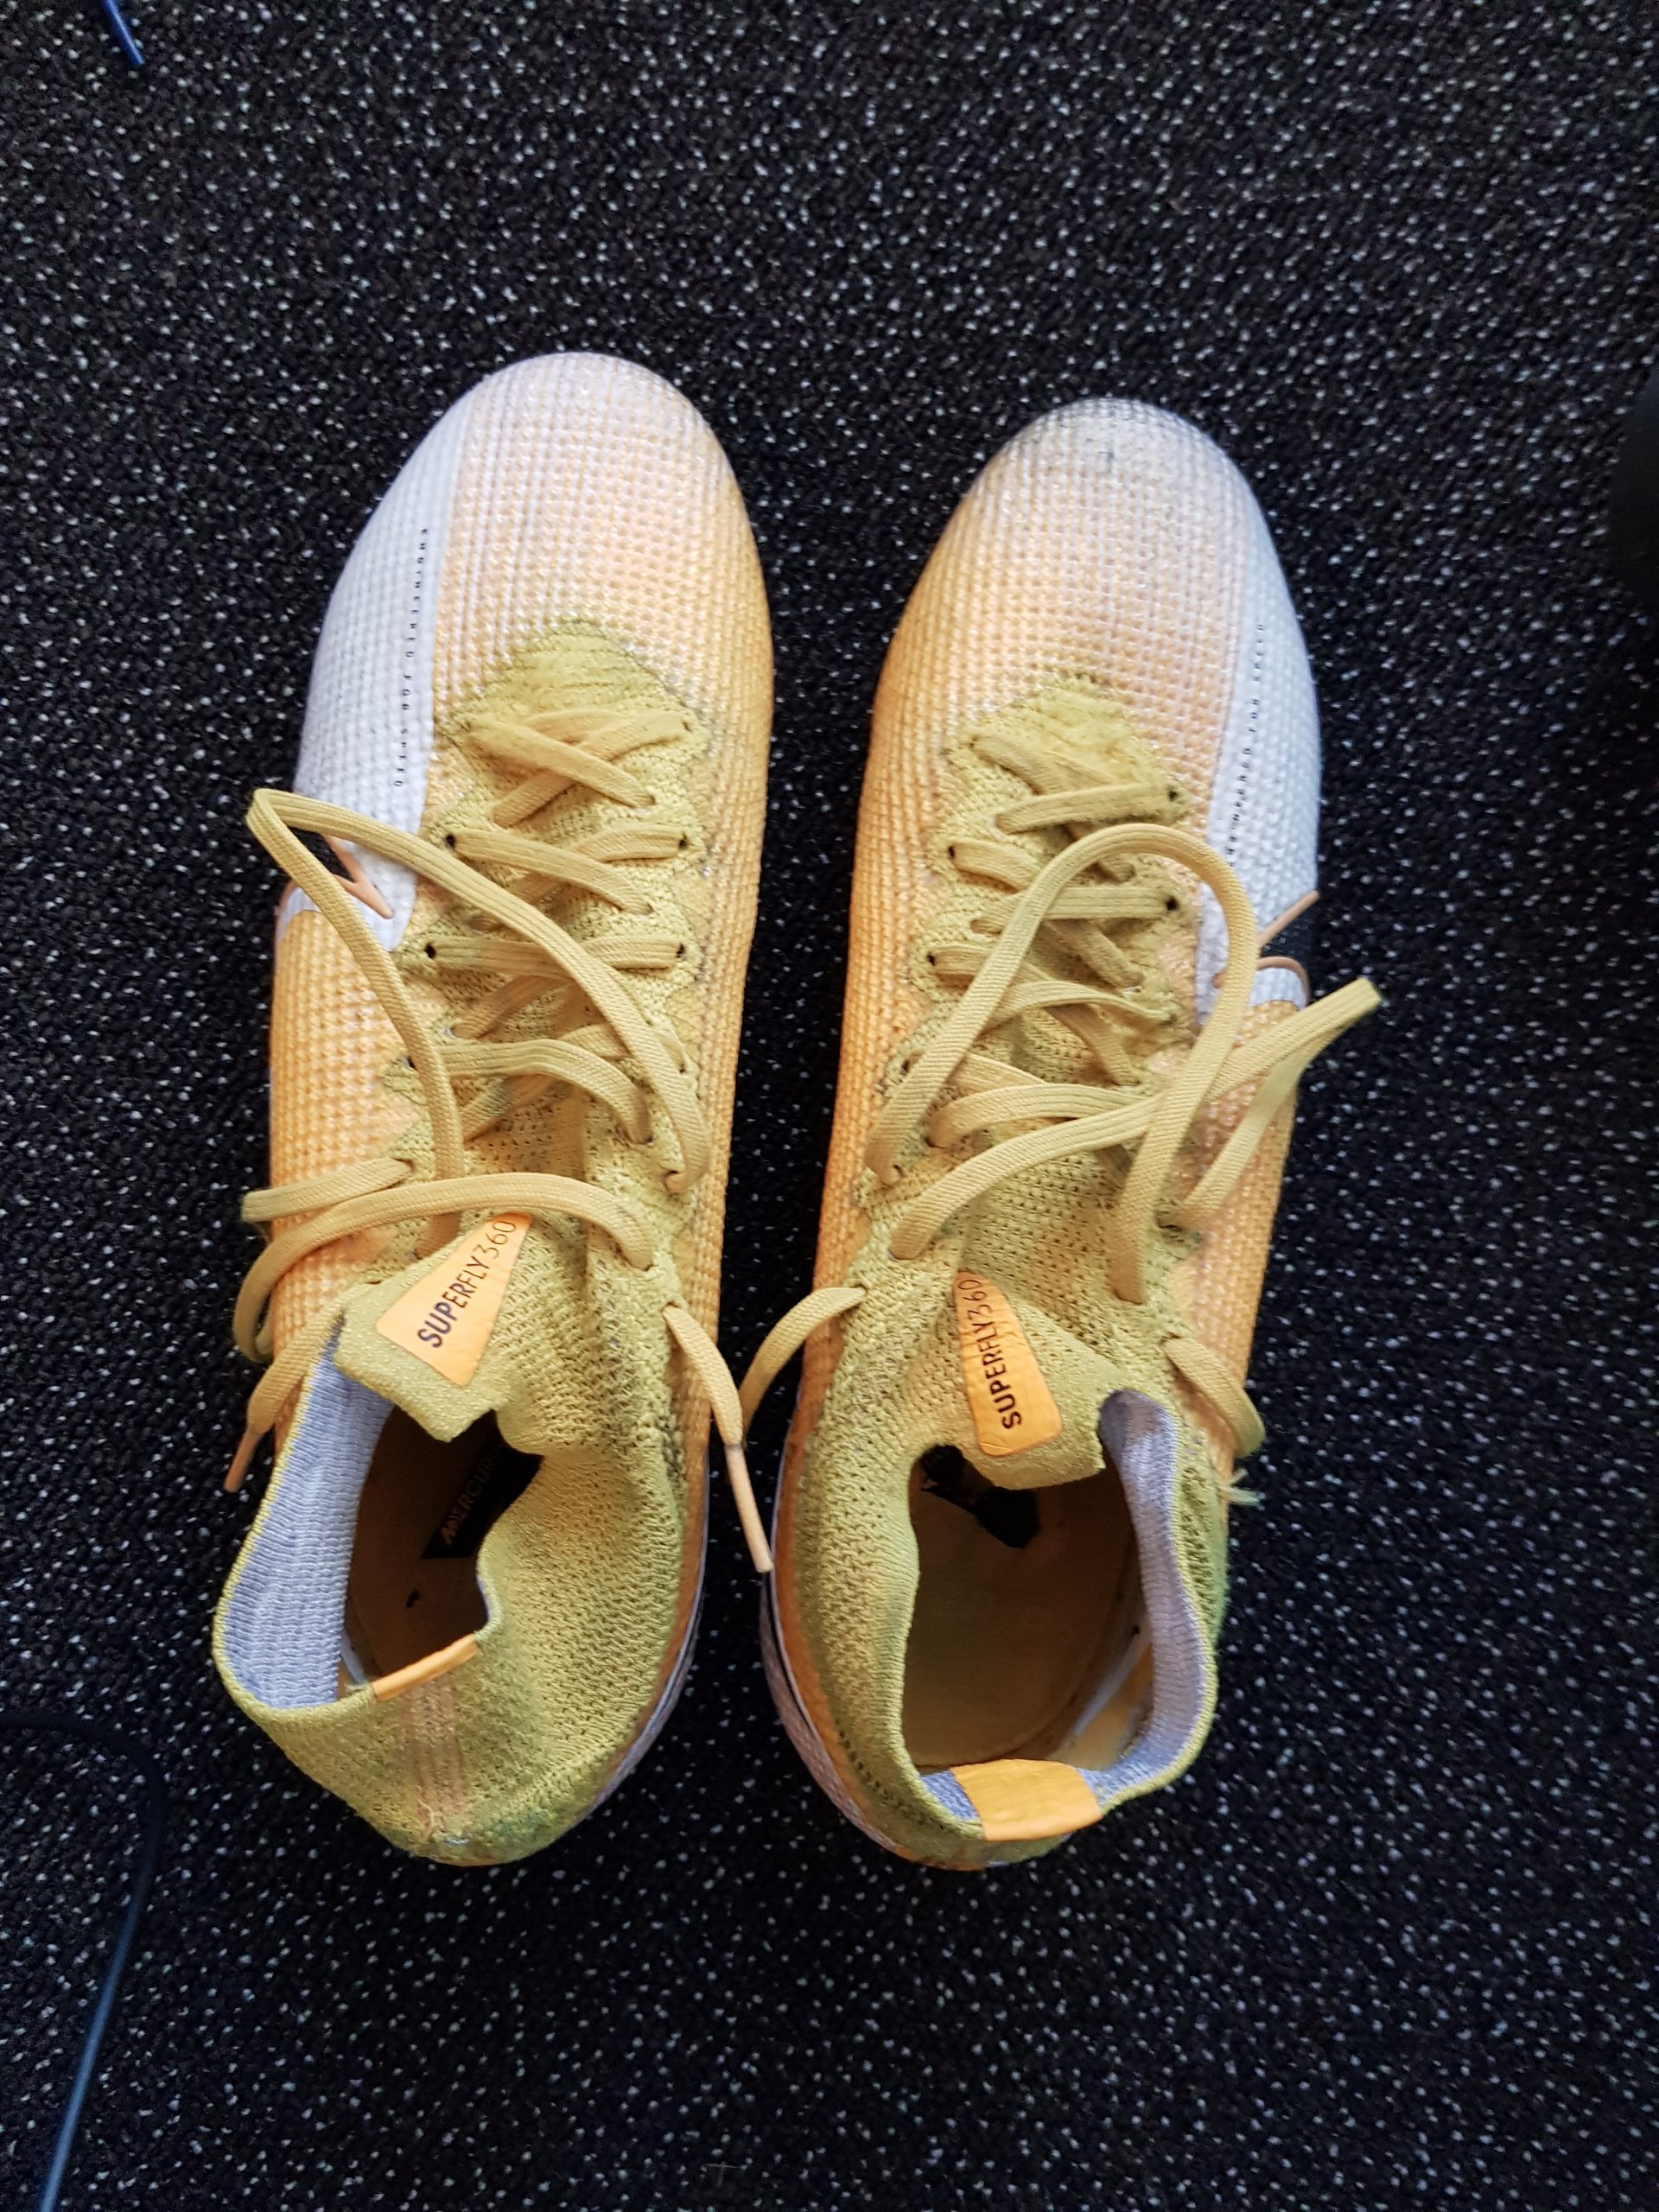 Monnik woede Antibiotica Schoenen Nike geel/oranje/wit (met sokje) – Voetbalkledingsale